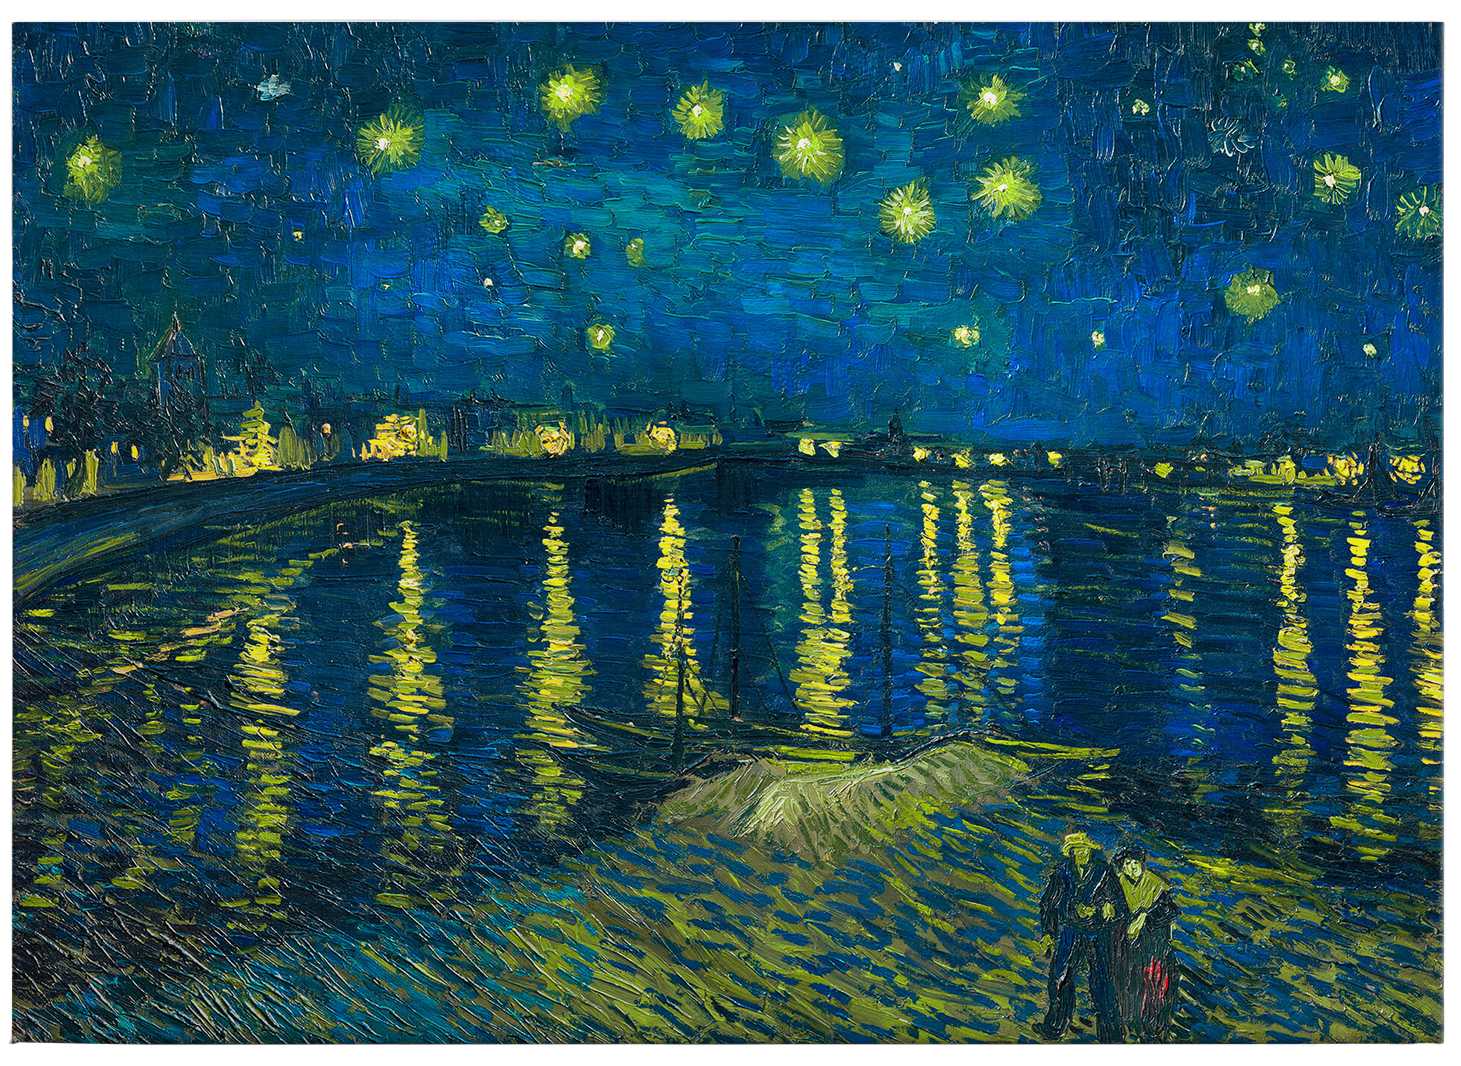             Canvas print "Starry night" by van Gogh – blue, yellow
        